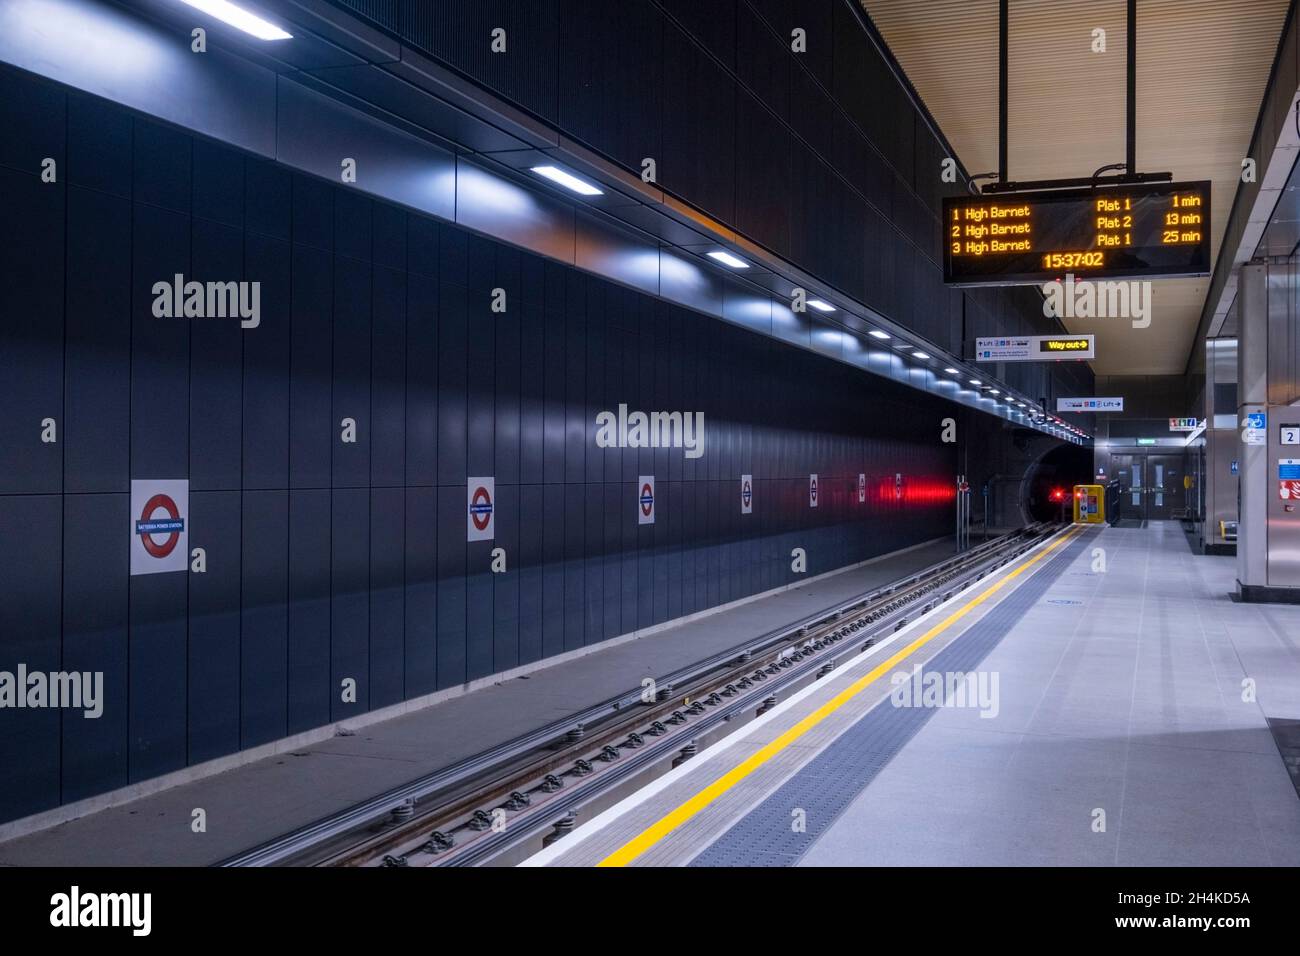 Battersea Power Station; underground station, no people, Northern Line, platform interior, tube station signs; subway / metro, London, UK Stock Photo